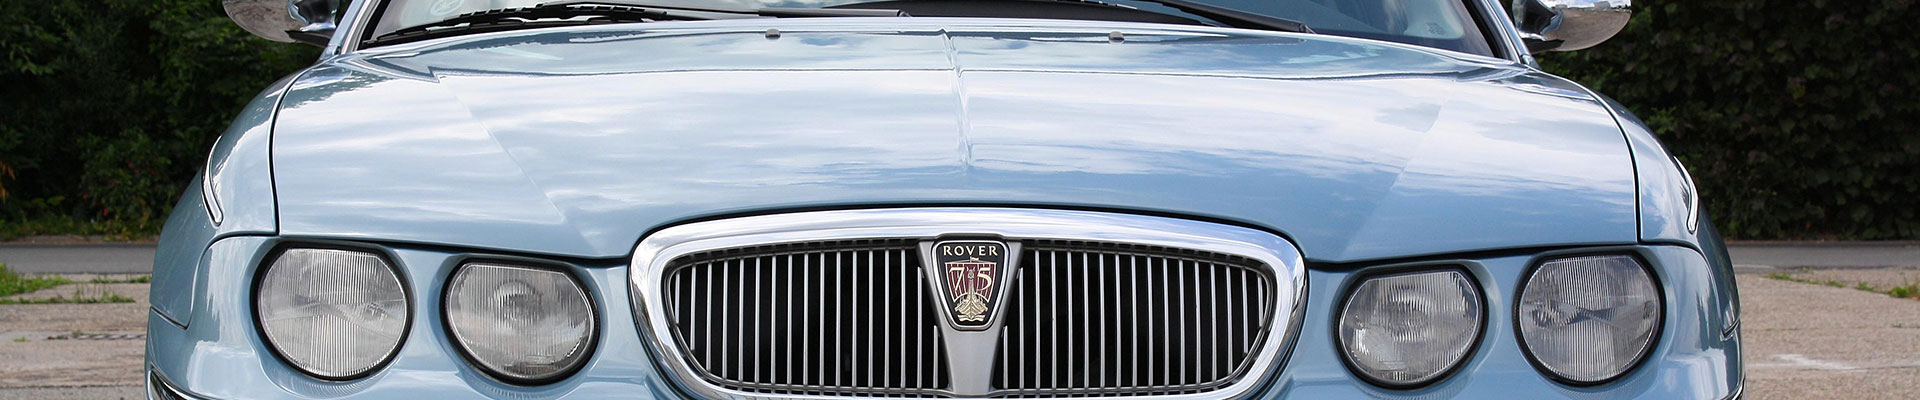 Rover autoverzekering